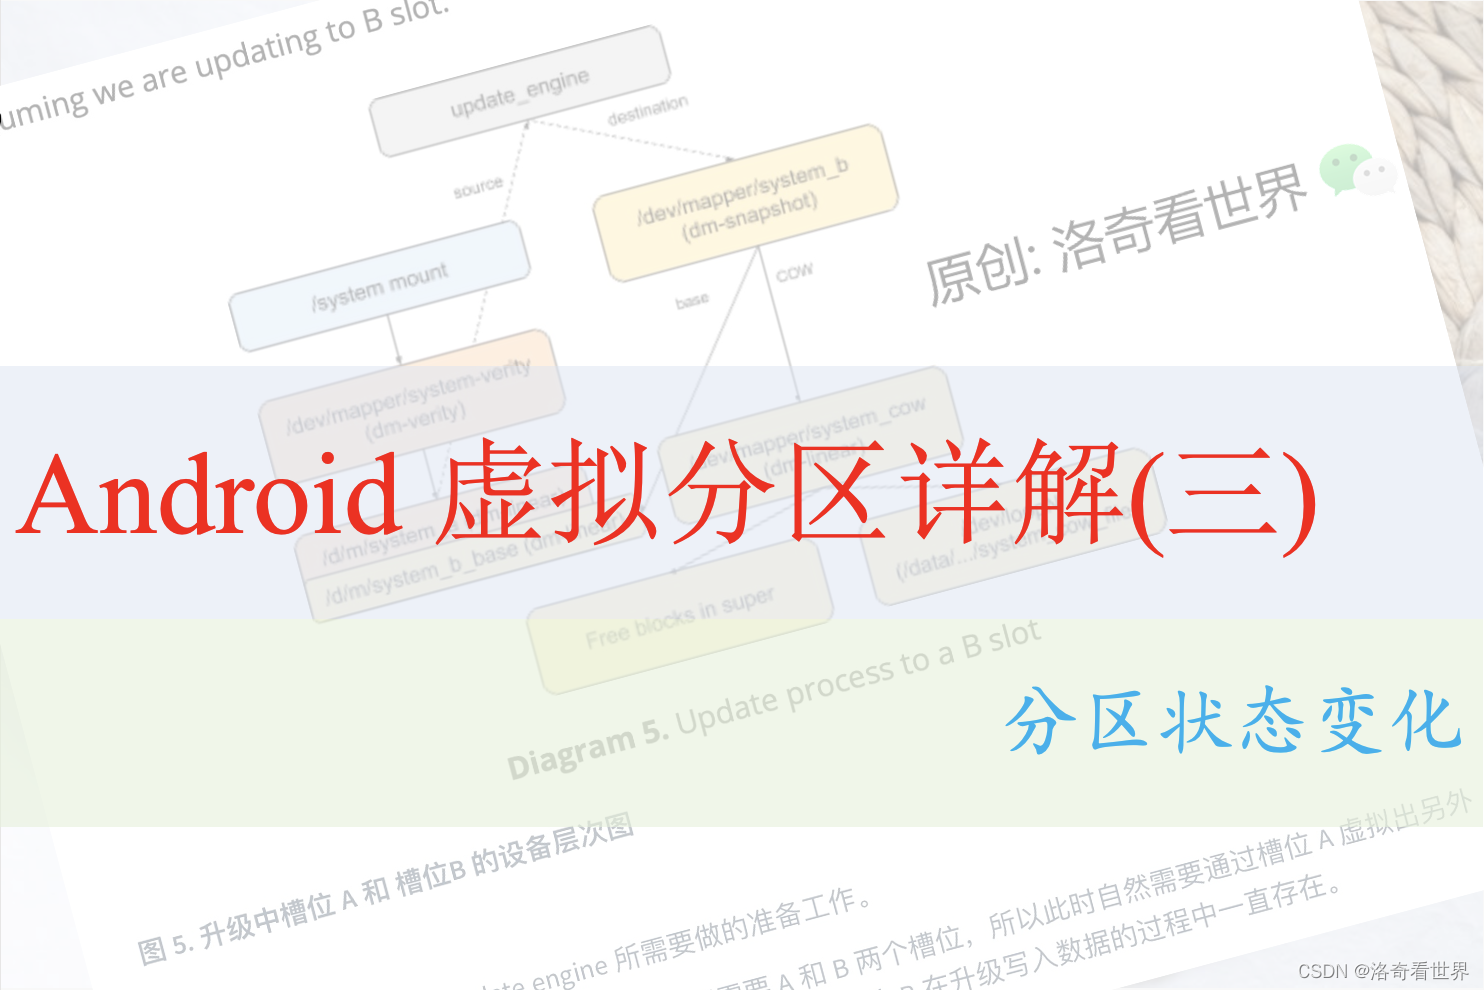 Android 虚拟分区详解(三)